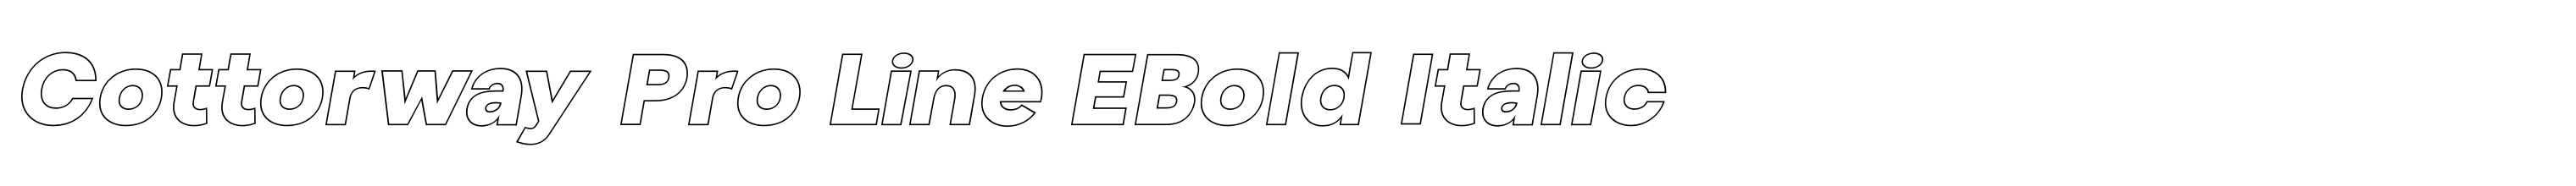 Cottorway Pro Line EBold Italic